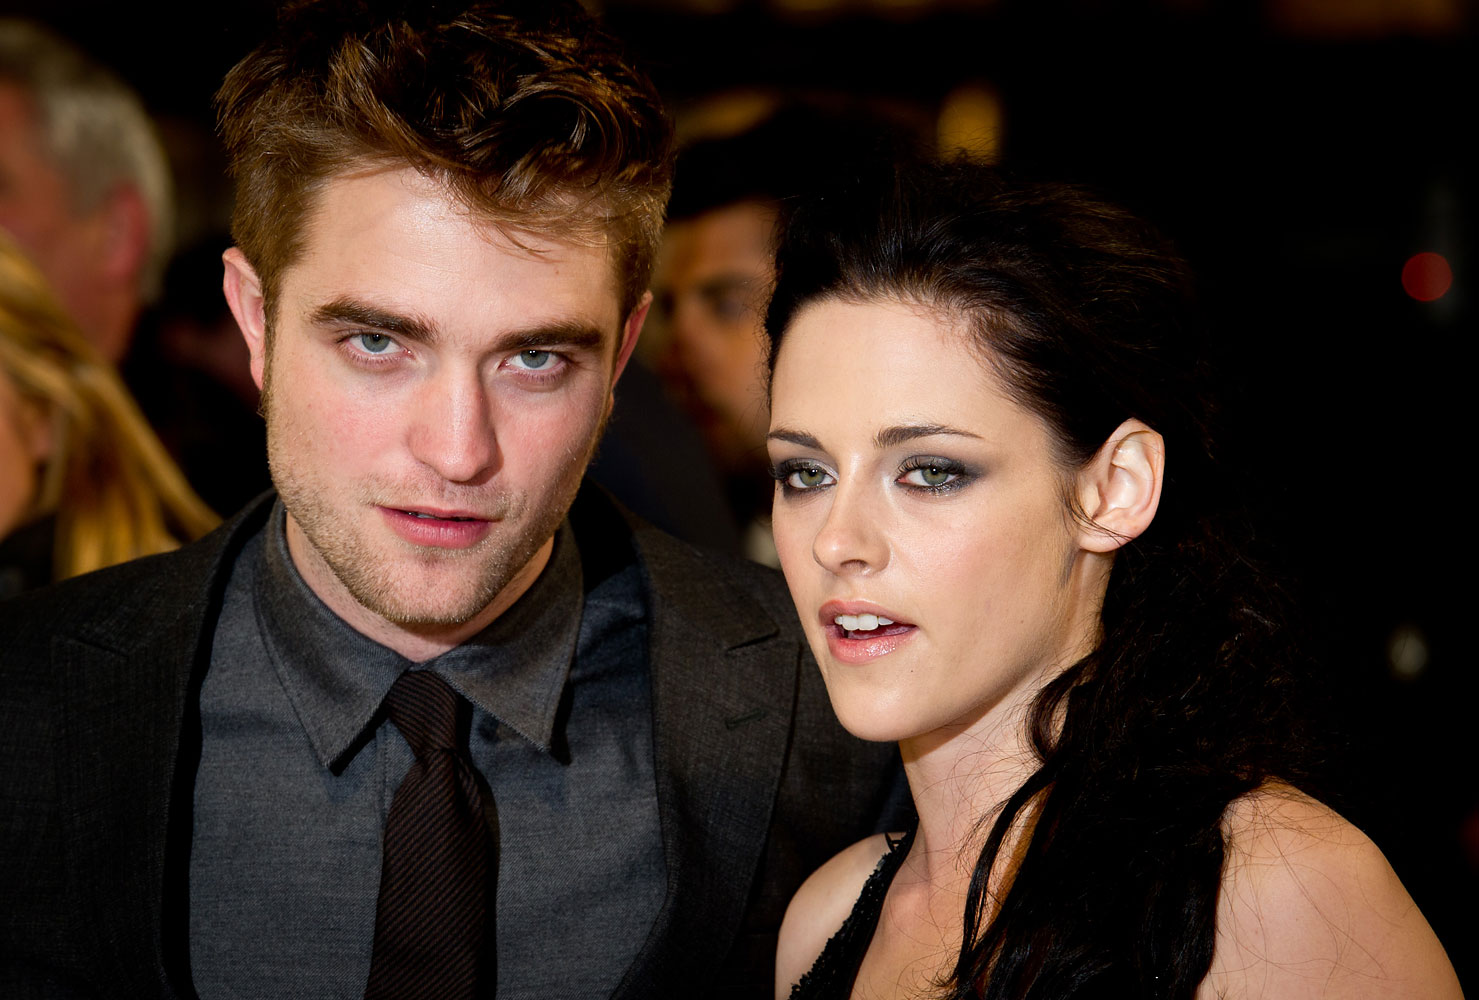 Robert Pattinson, Kristen Stewart attend the UK premiere of The Twilight Saga: Breaking Dawn Part 1 at Westfield Stratford City on Nov. 16, 2011 in London. (Ian Gavan—Getty Images)